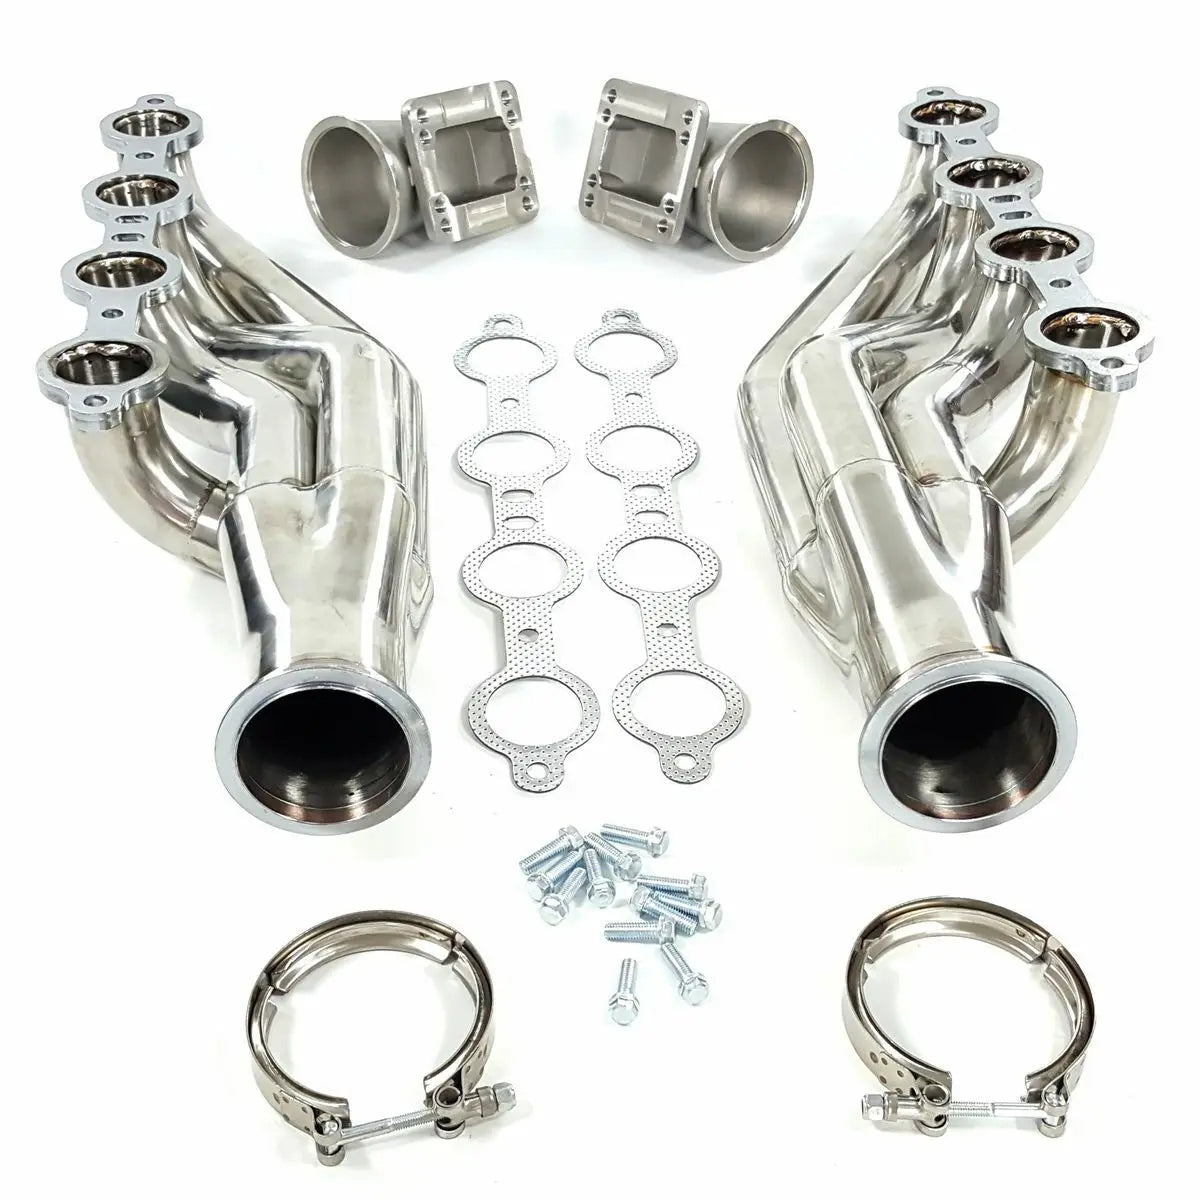 LS Turbo Exhaust Header Manifold For LSX, LS1, LS2, LS3, LS6 GM V8+Elbows T3 T4 to 3.0" V Band Flashark